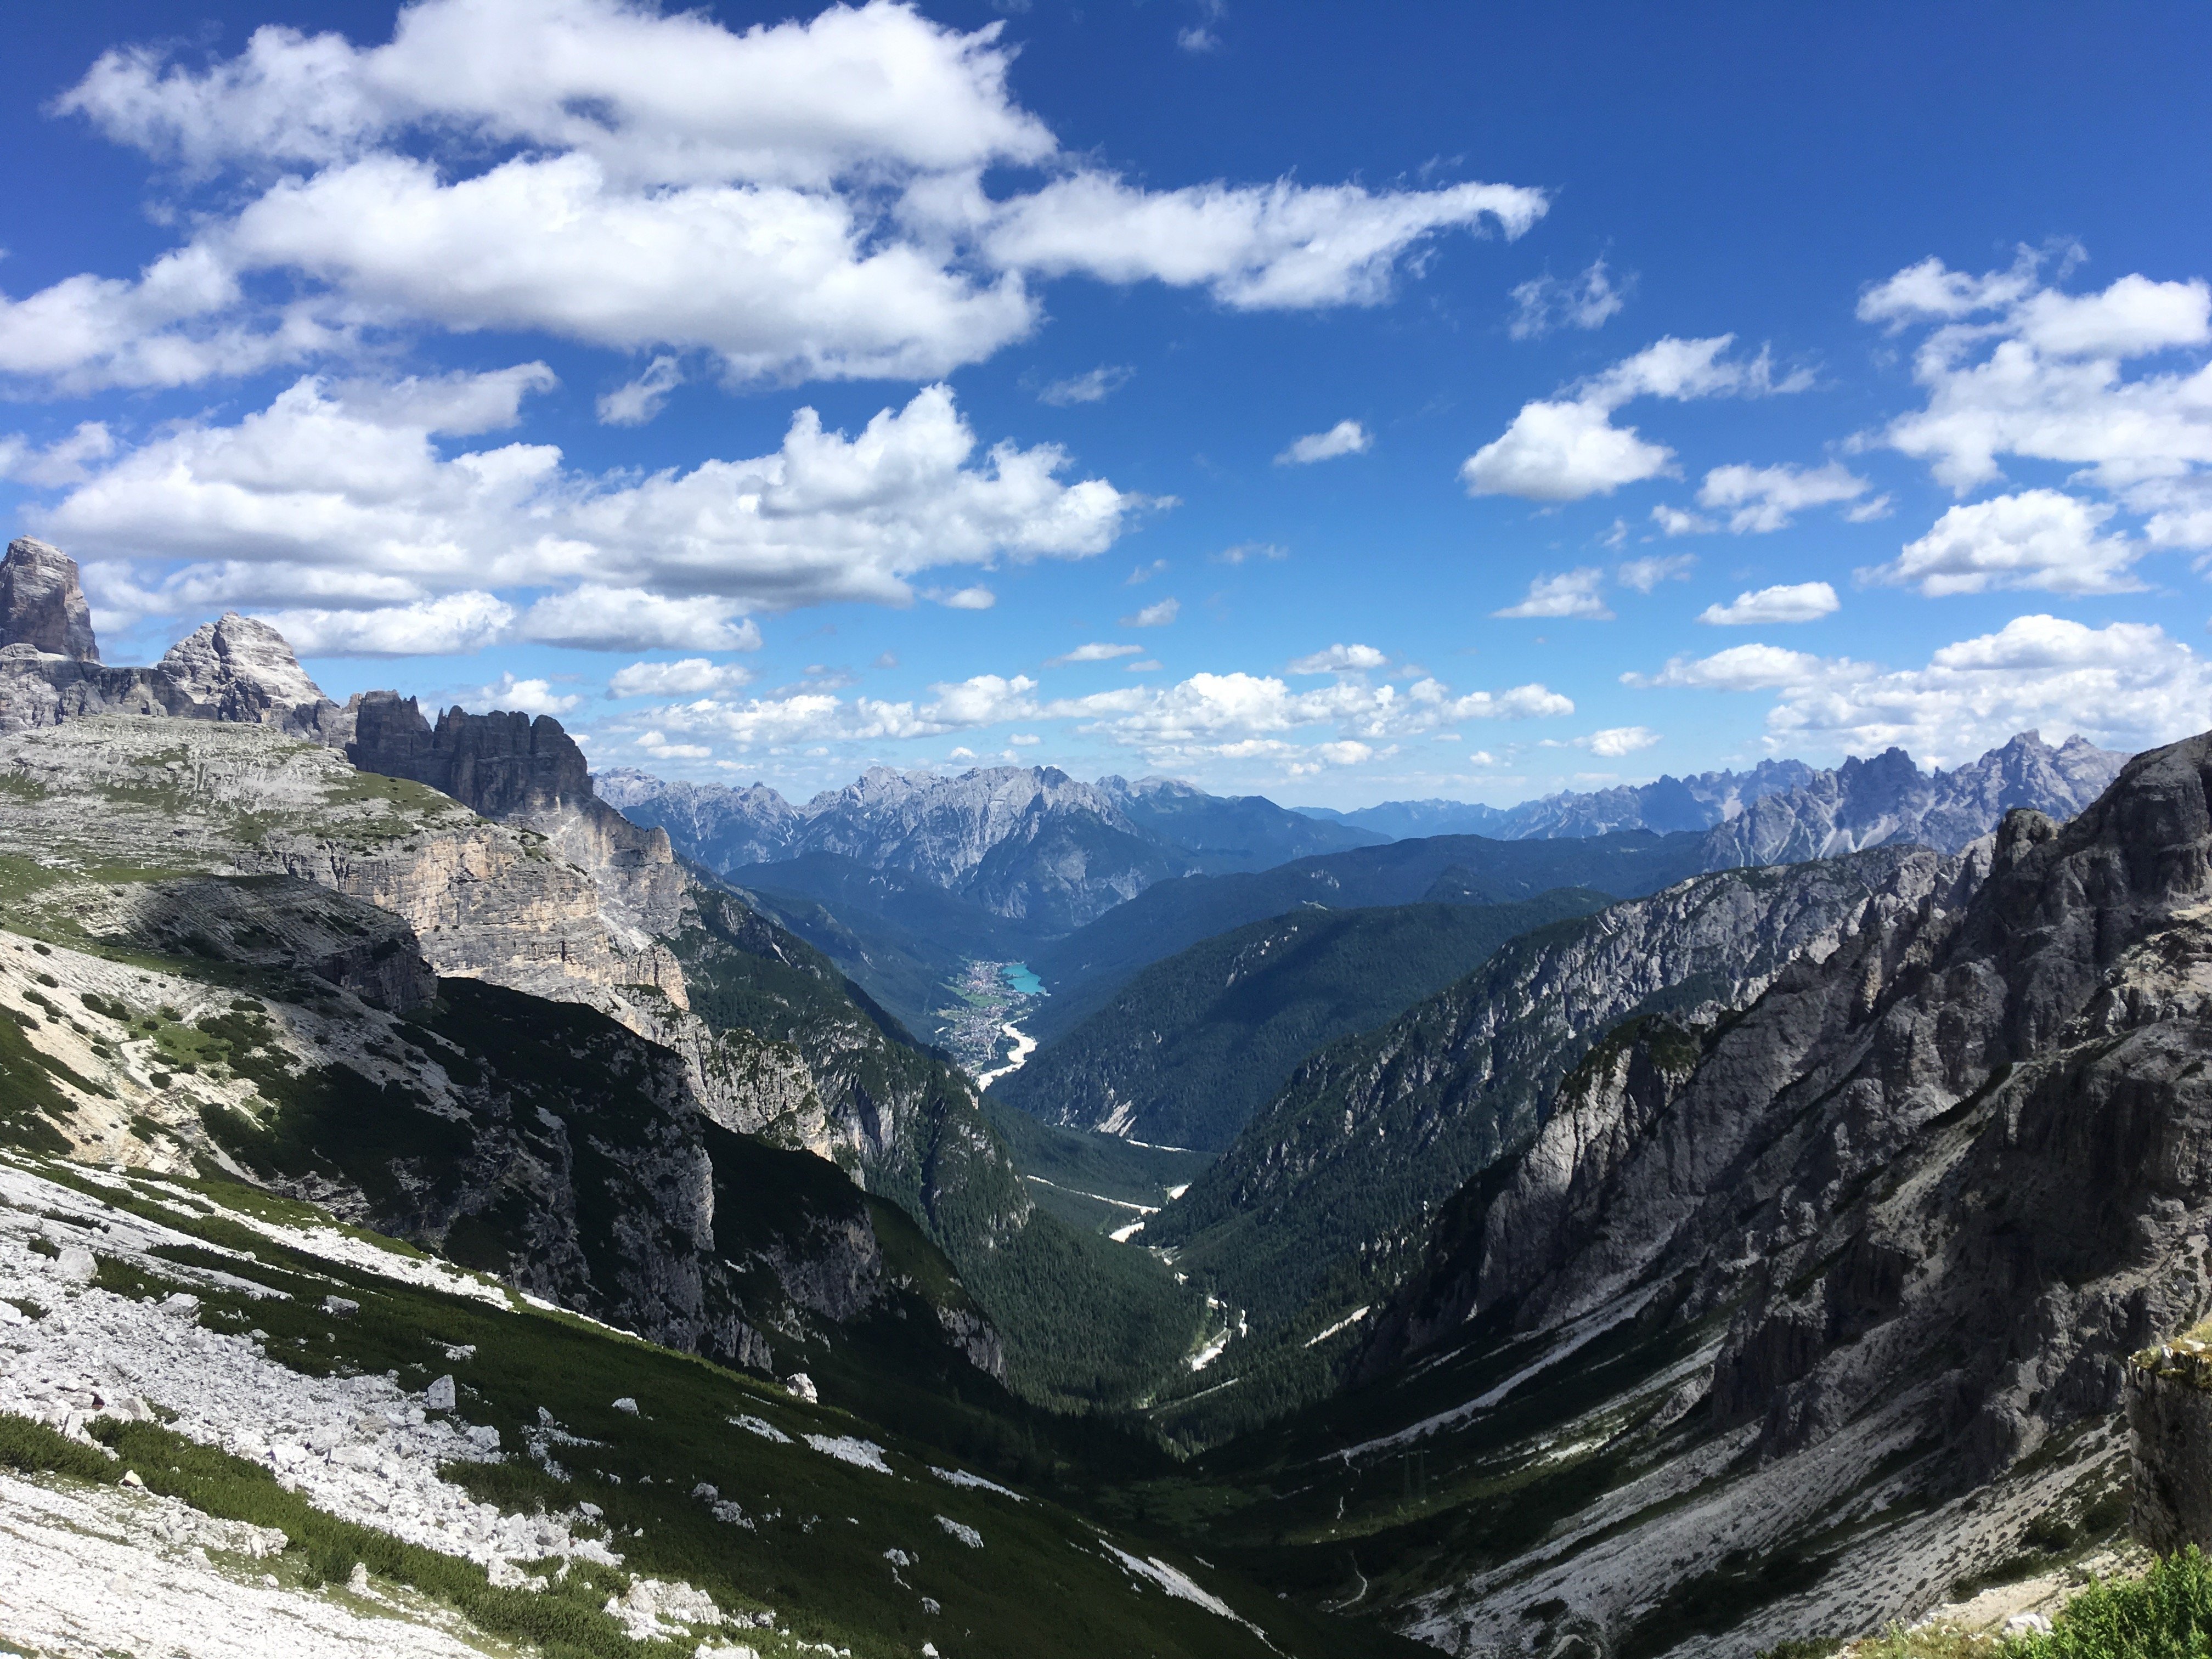 Visit the Dolomites